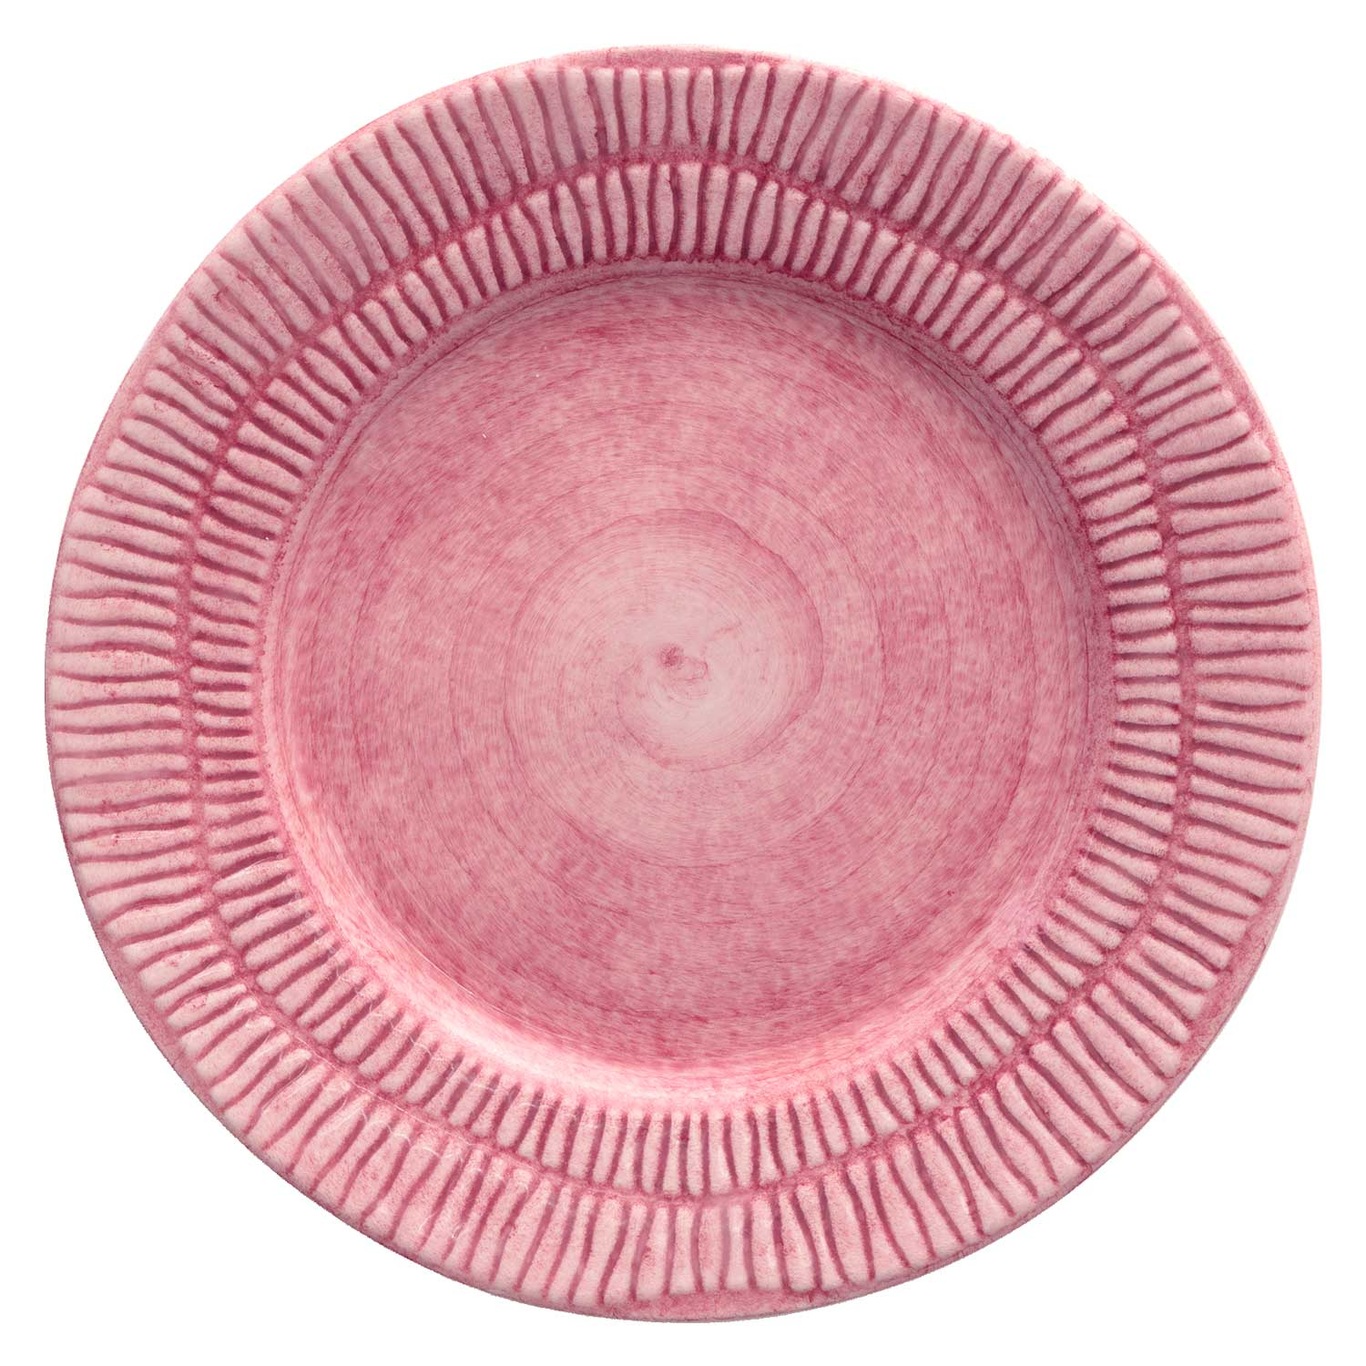 Stripes Plate 21 cm, Pink